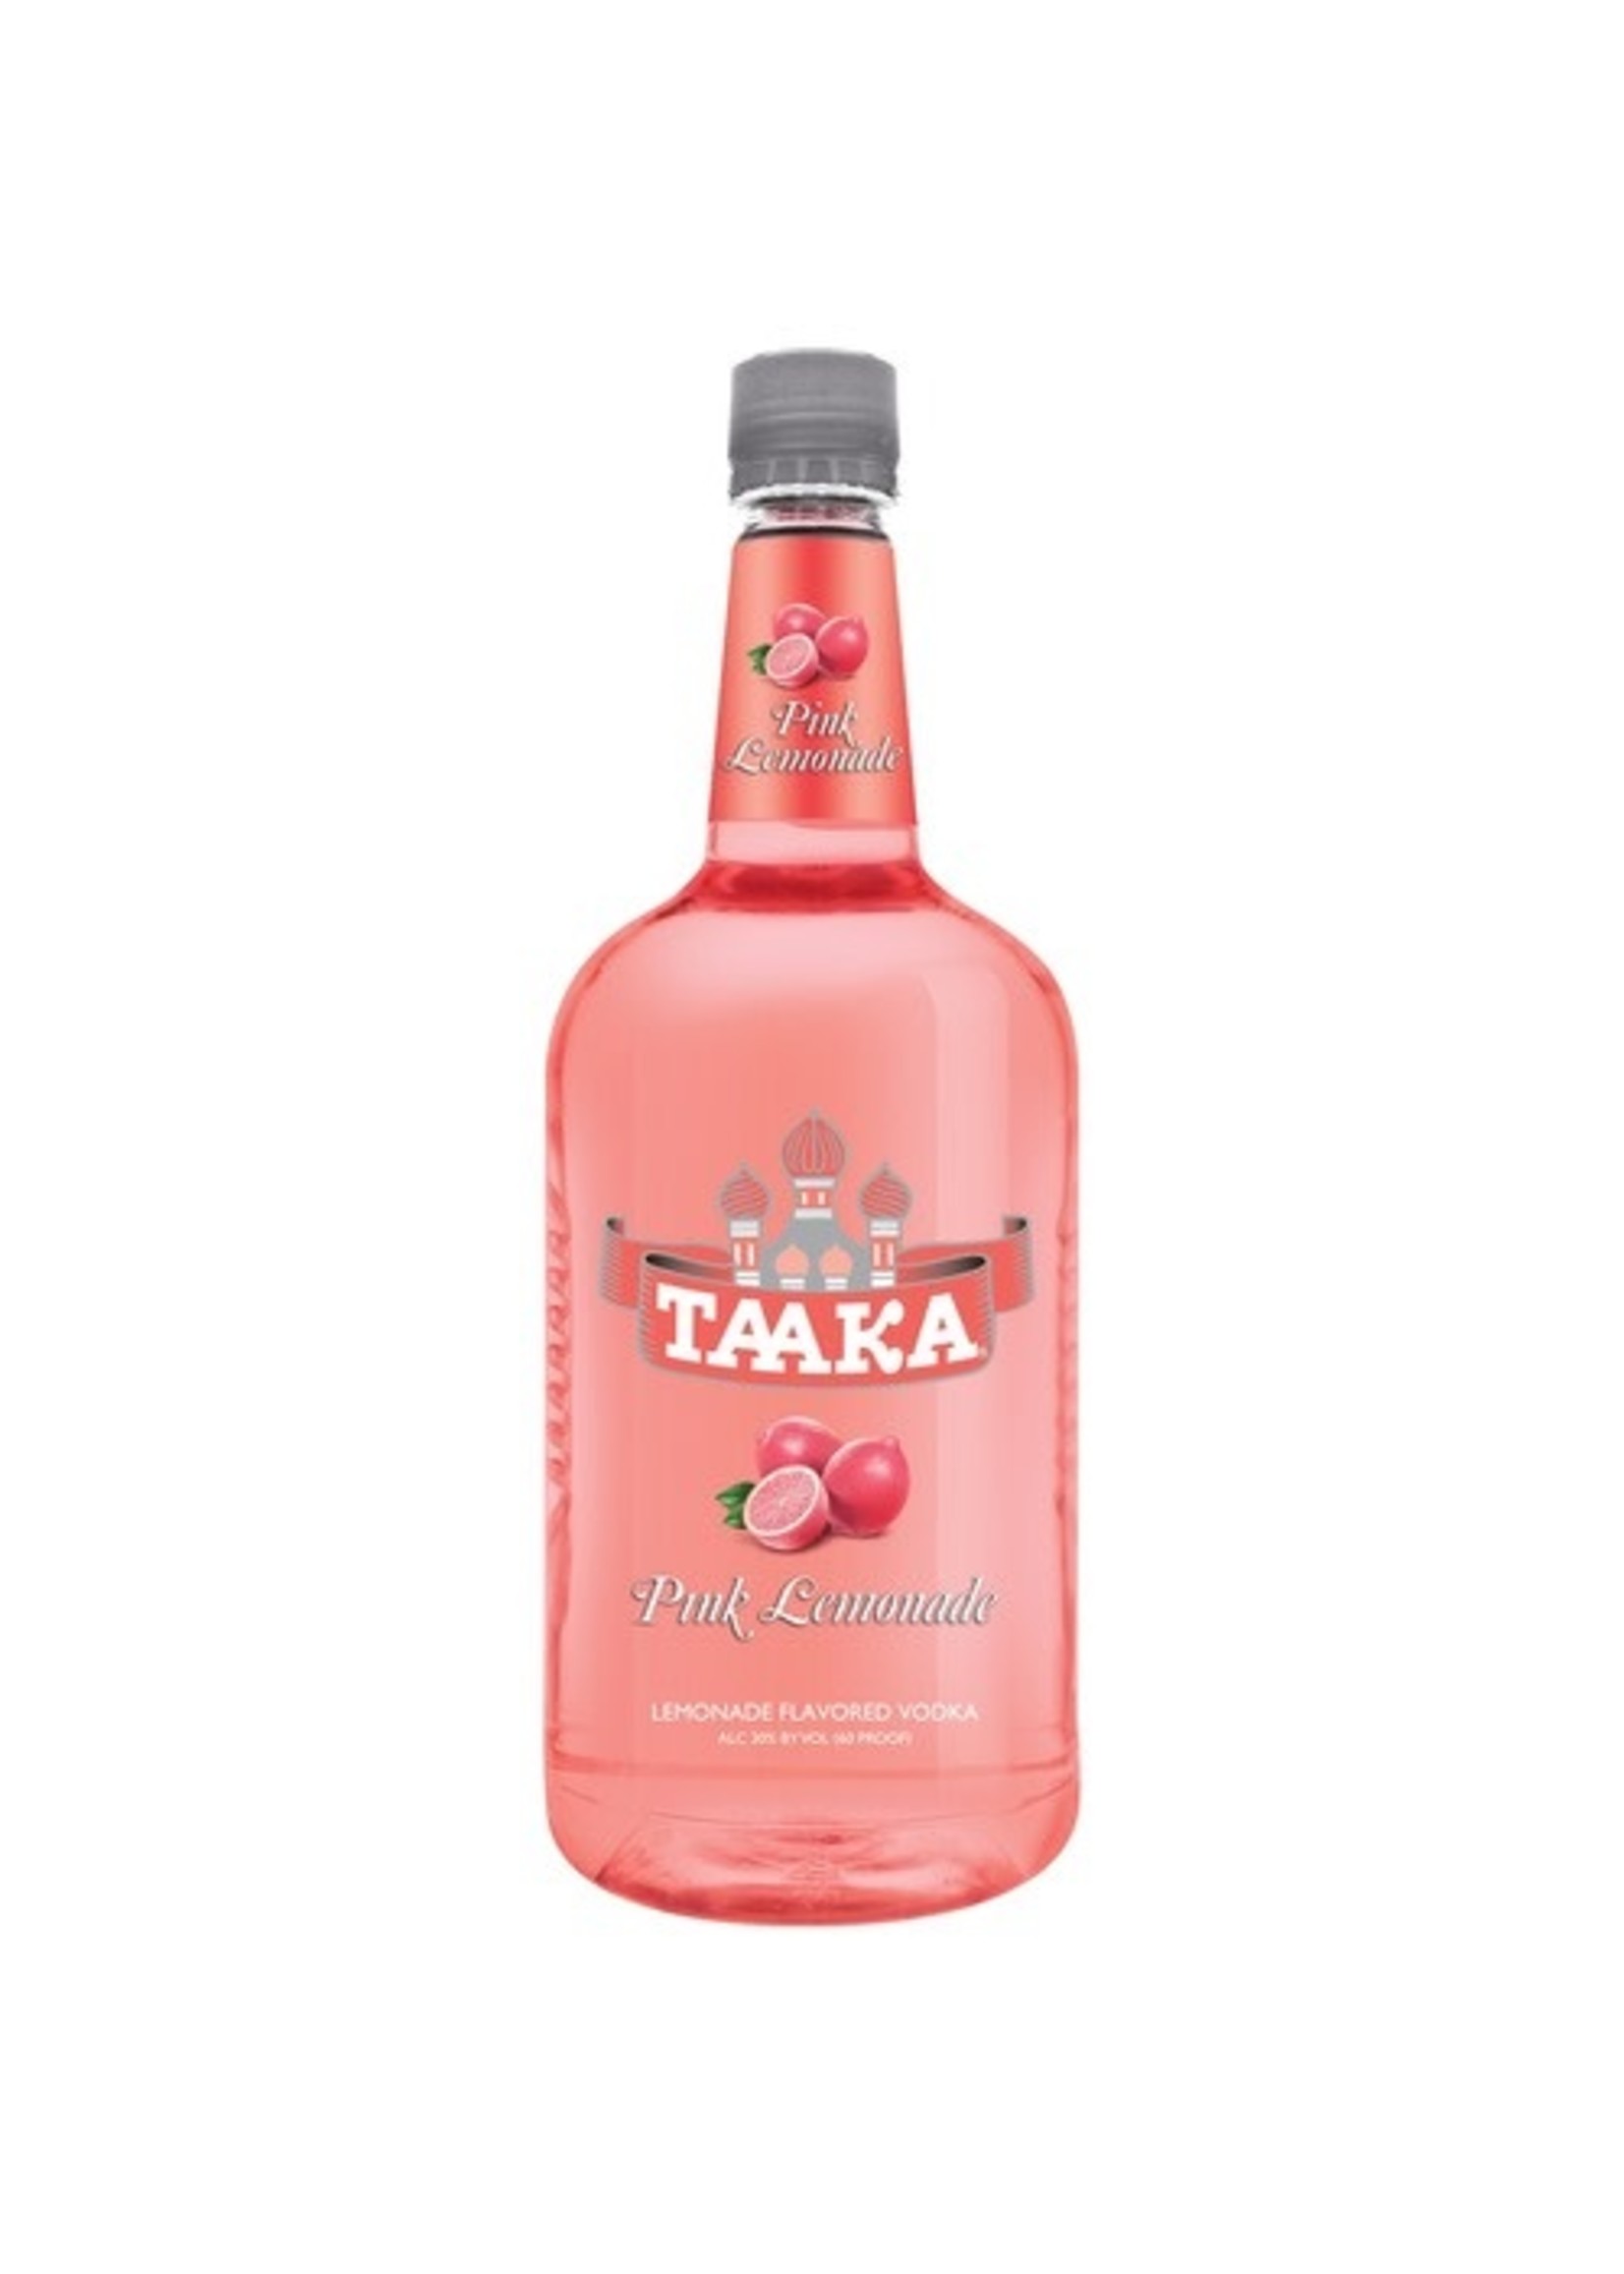 Taaka Pink Lemonade Vodka 60Proof Pet 1.75 Ltr